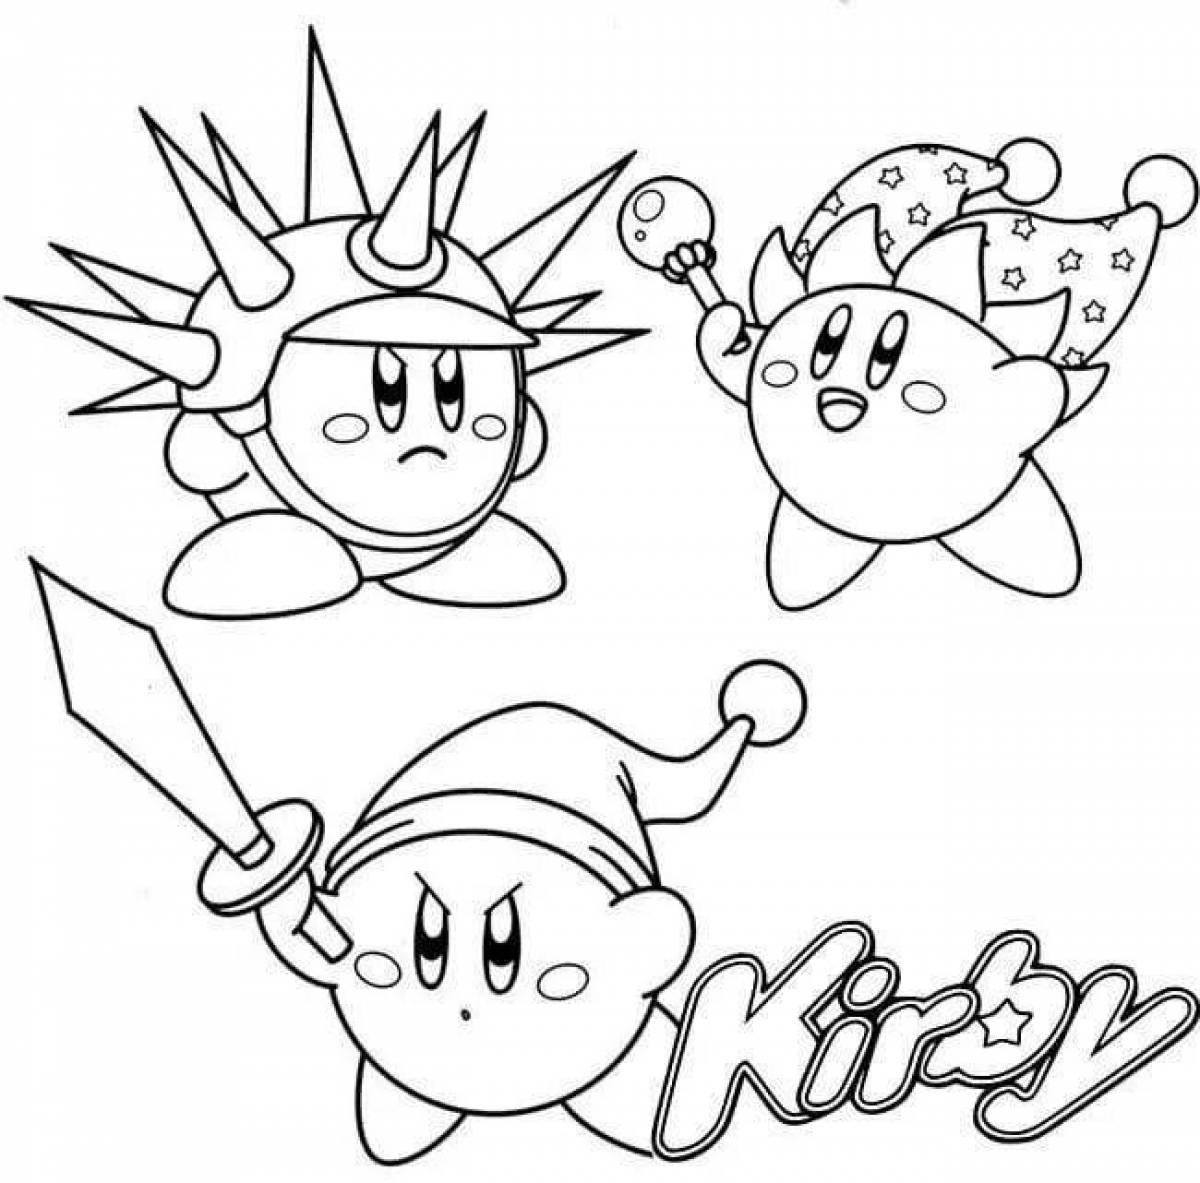 Rampant Kirby coloring book